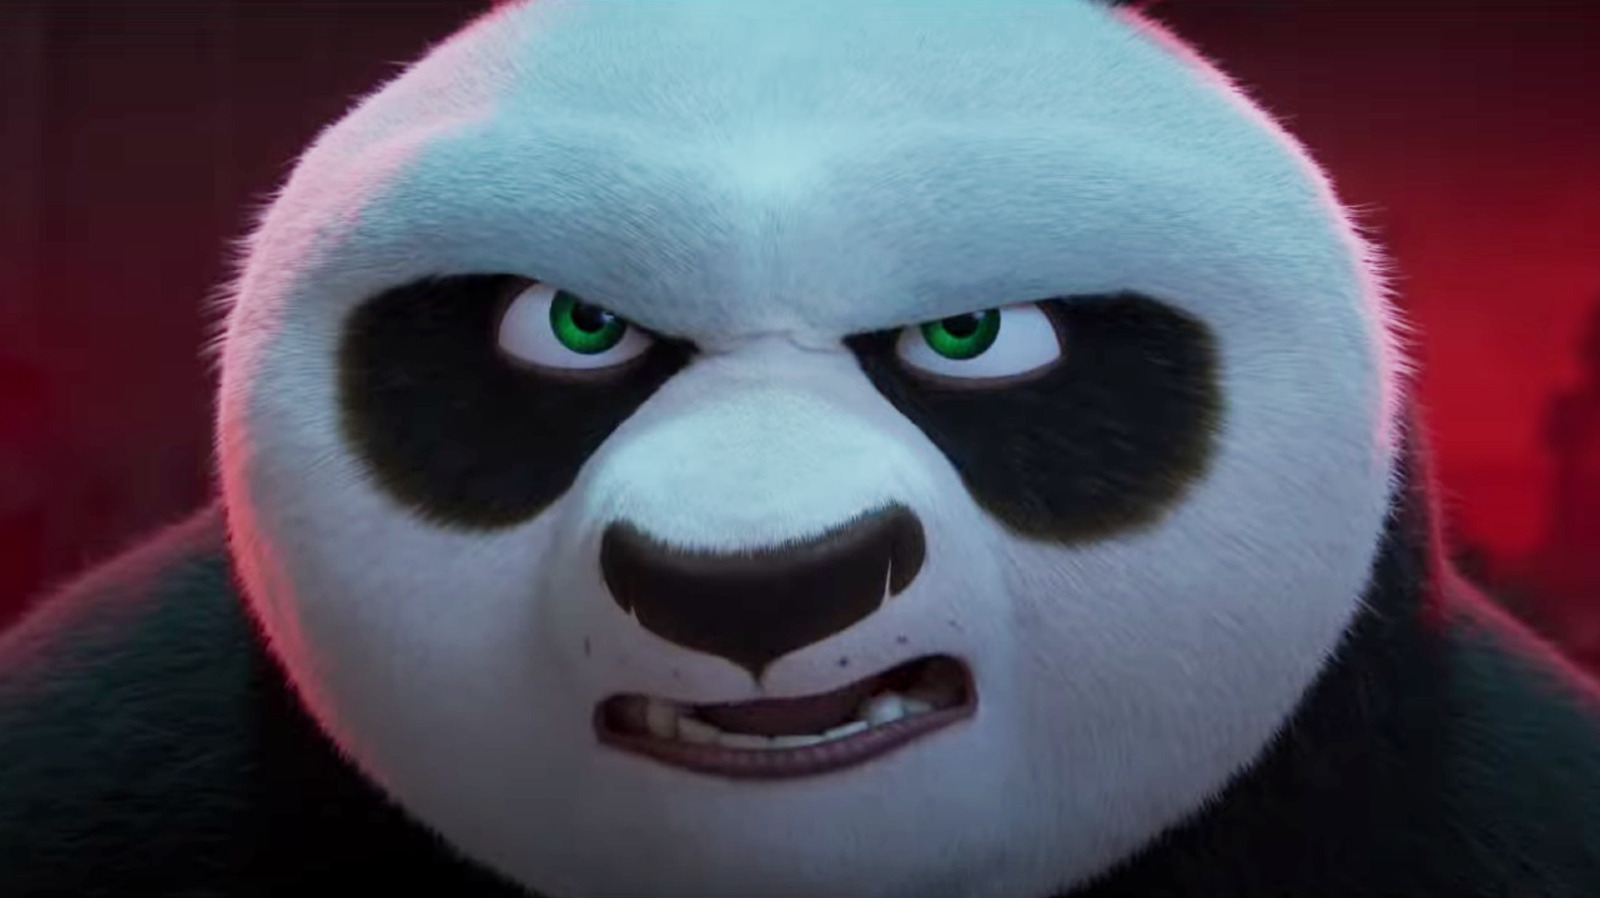 Kung Fu Panda 4  Trailer Oficial Dublado (Universal Pictures